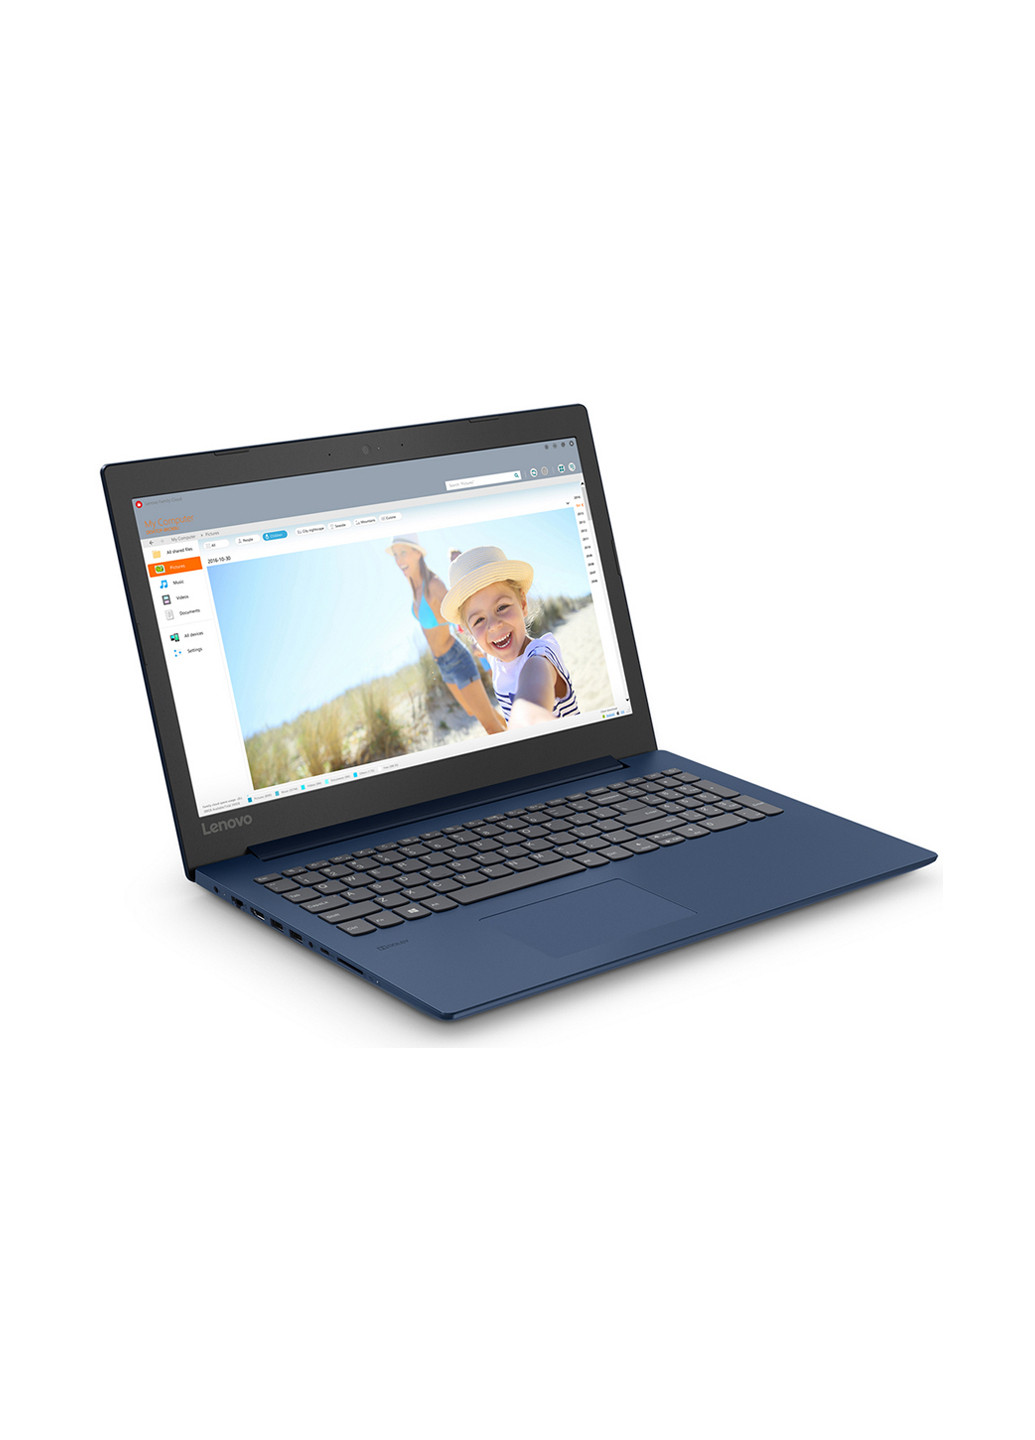 Ноутбук Lenovo ideapad 330-15 (81dc0108ra) mid night blue (132994132)